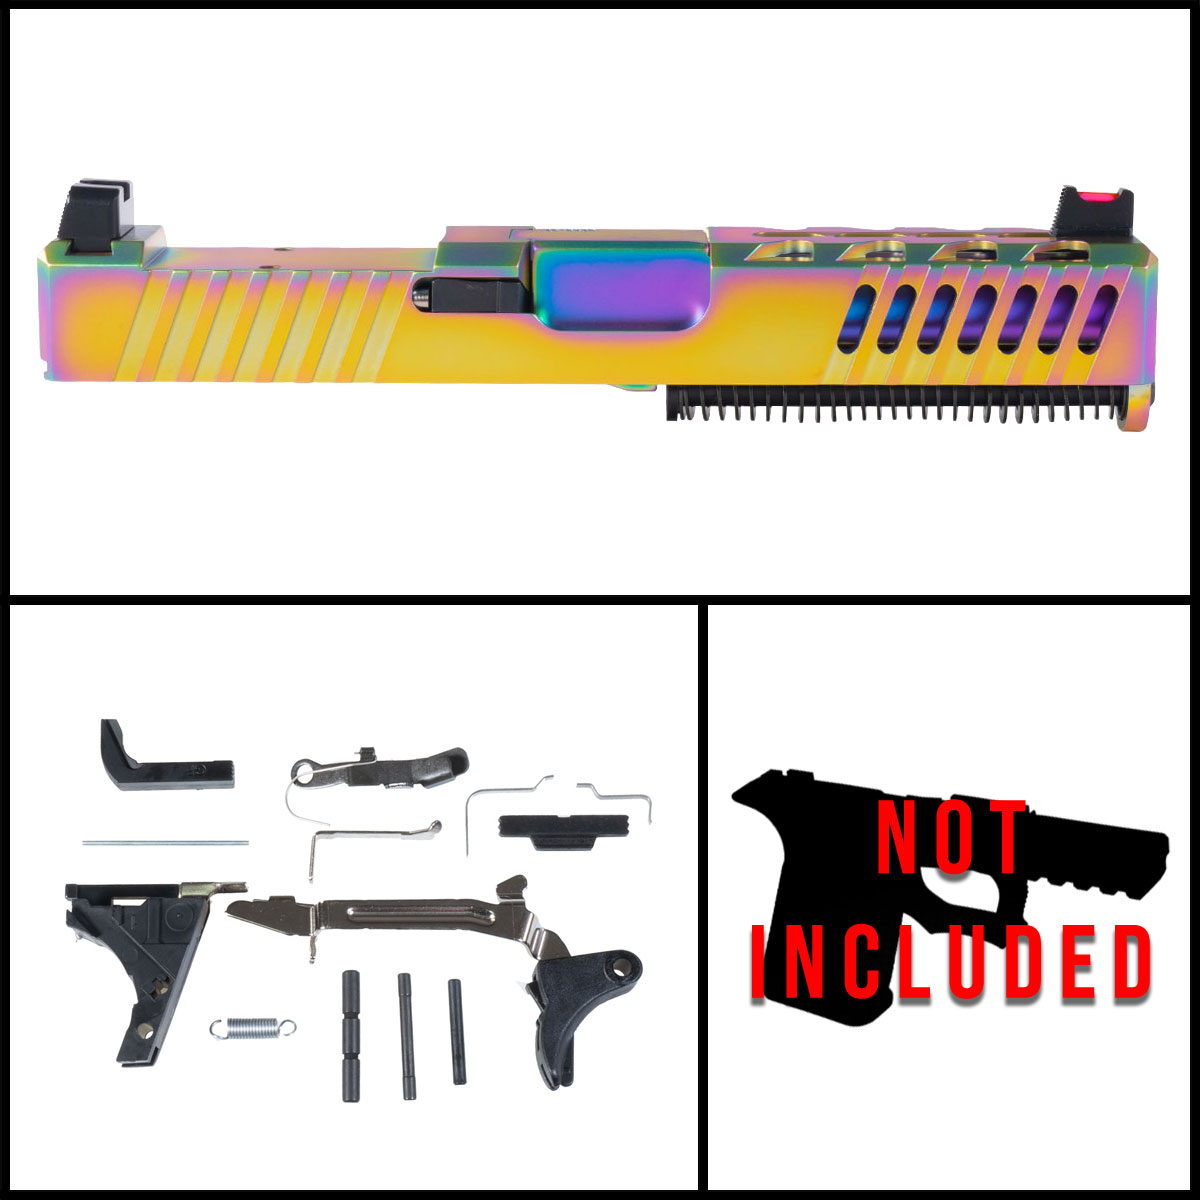 DTT 'Polychrome Pursuit' 9mm Full Pistol Build Kits (Everything Minus Frame) - Glock 19 Gen 1-2 Compatible